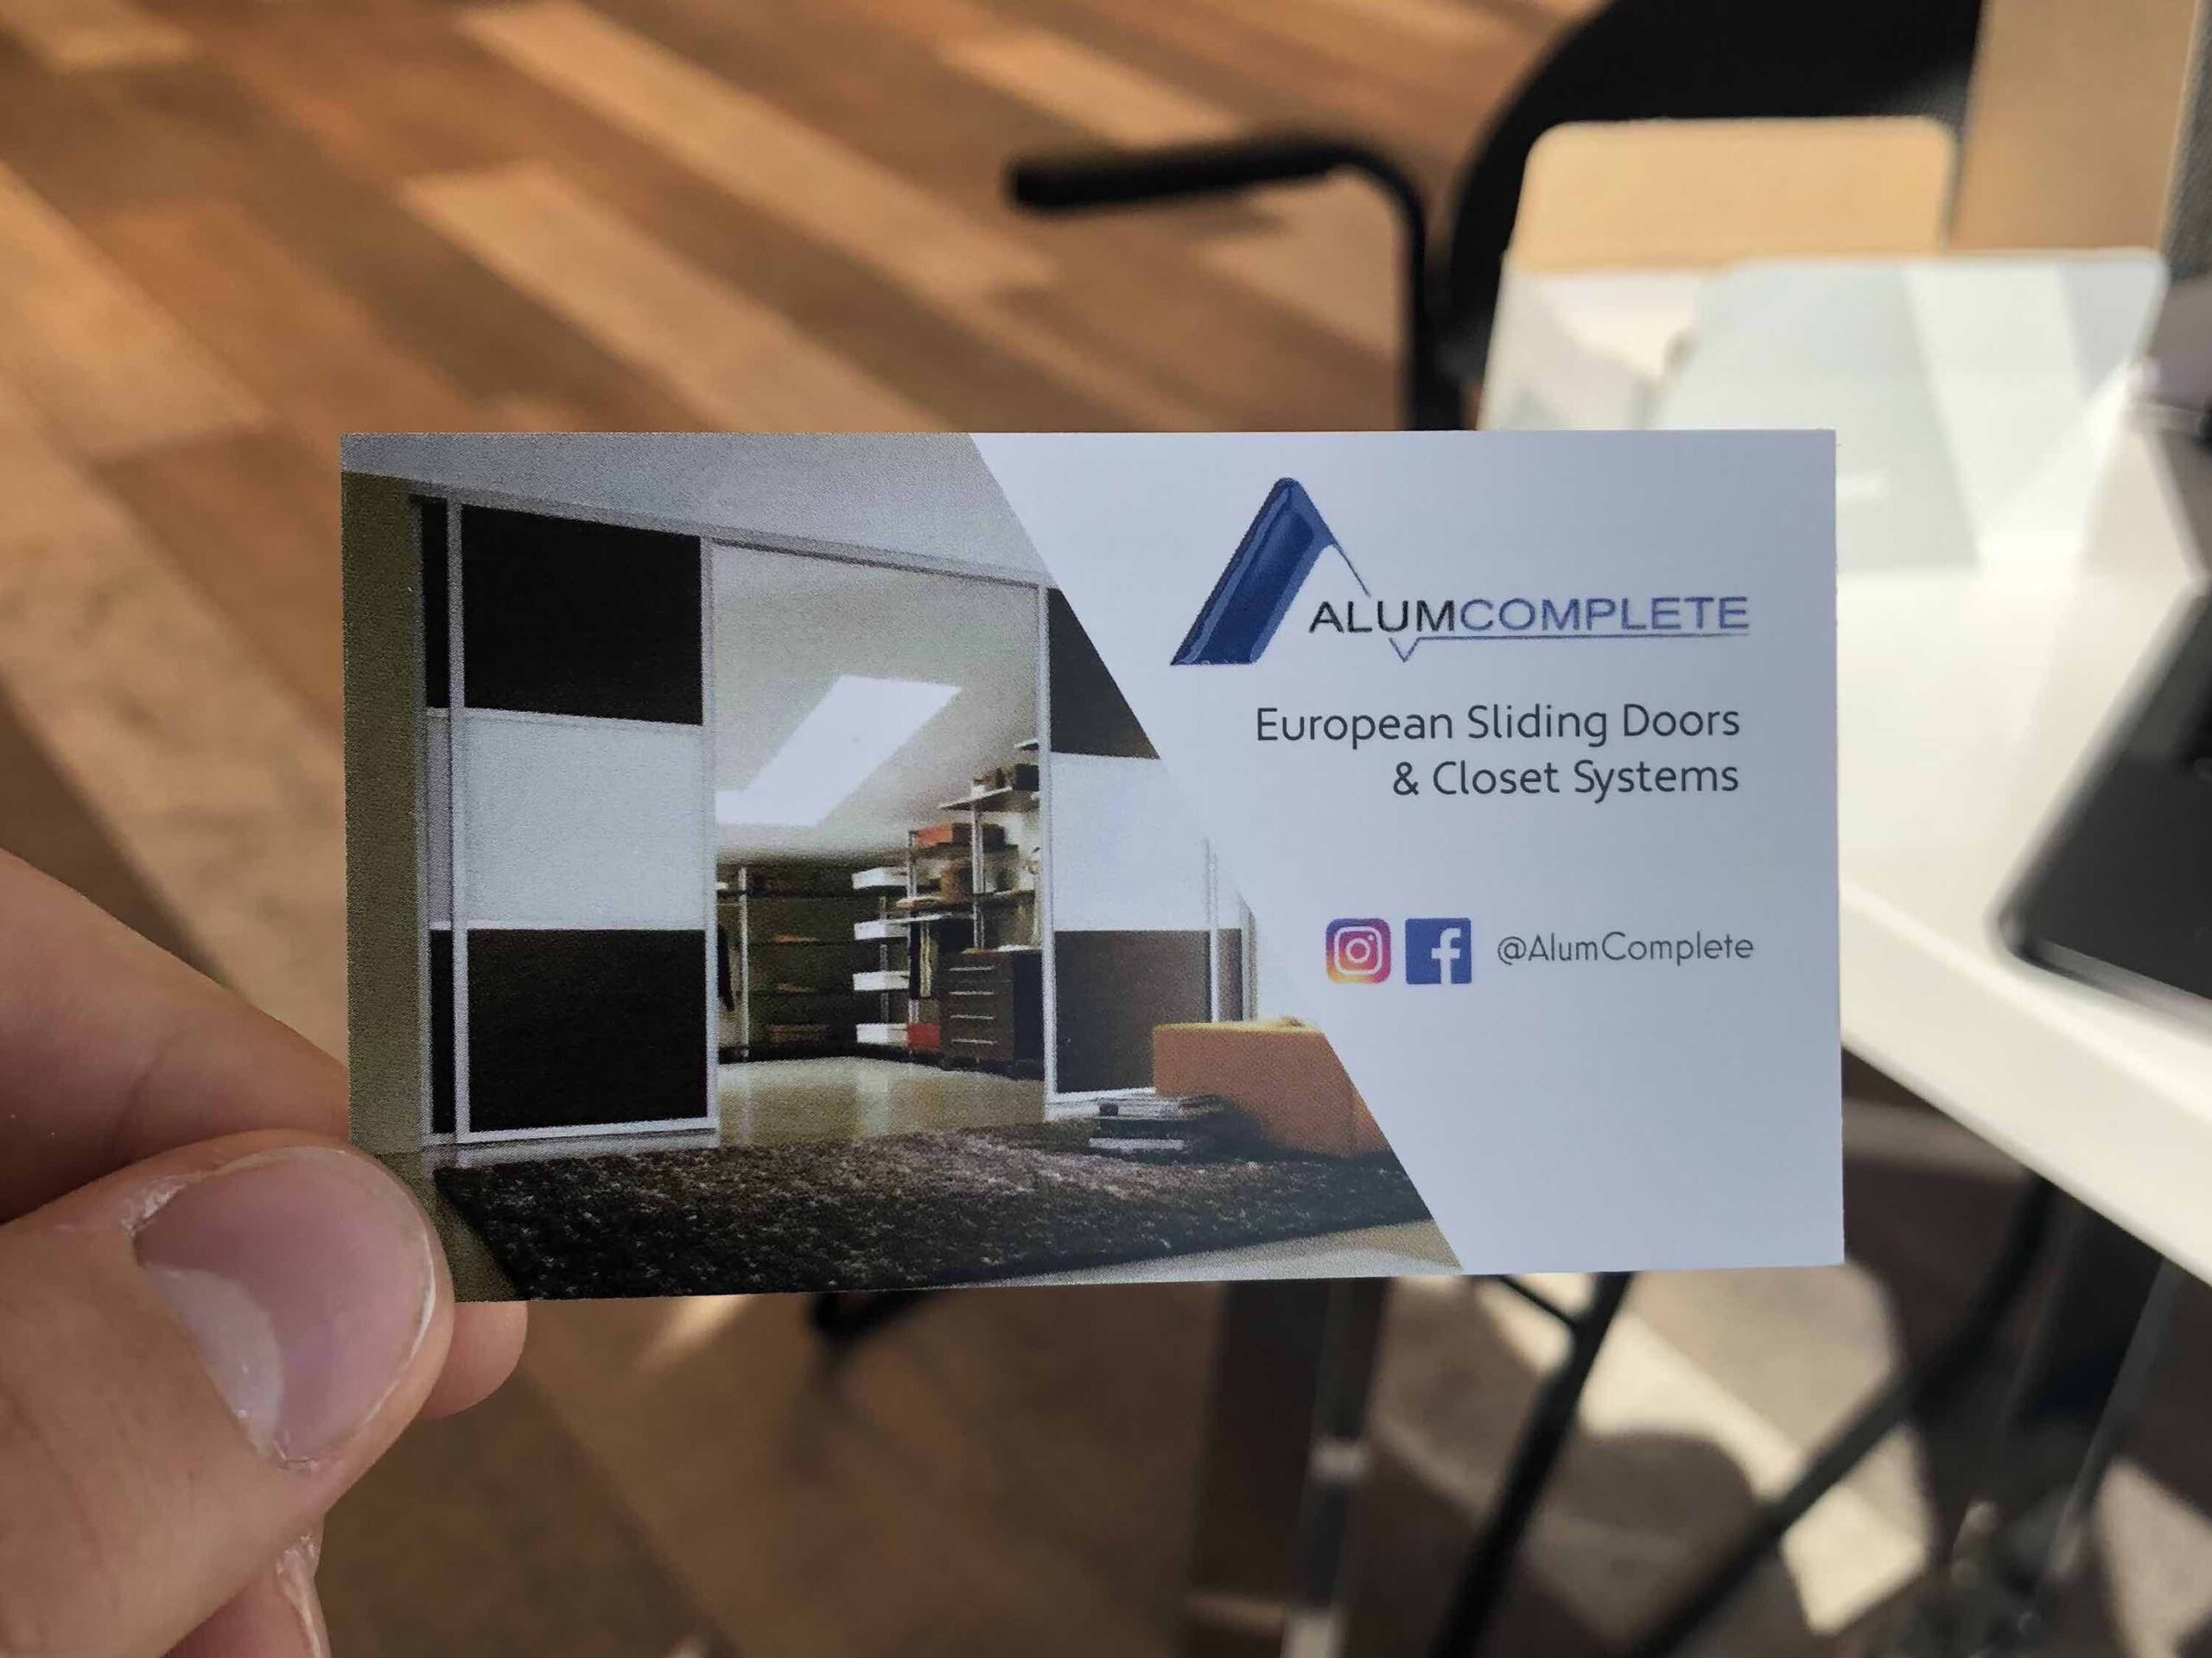 AlumComplete business cards